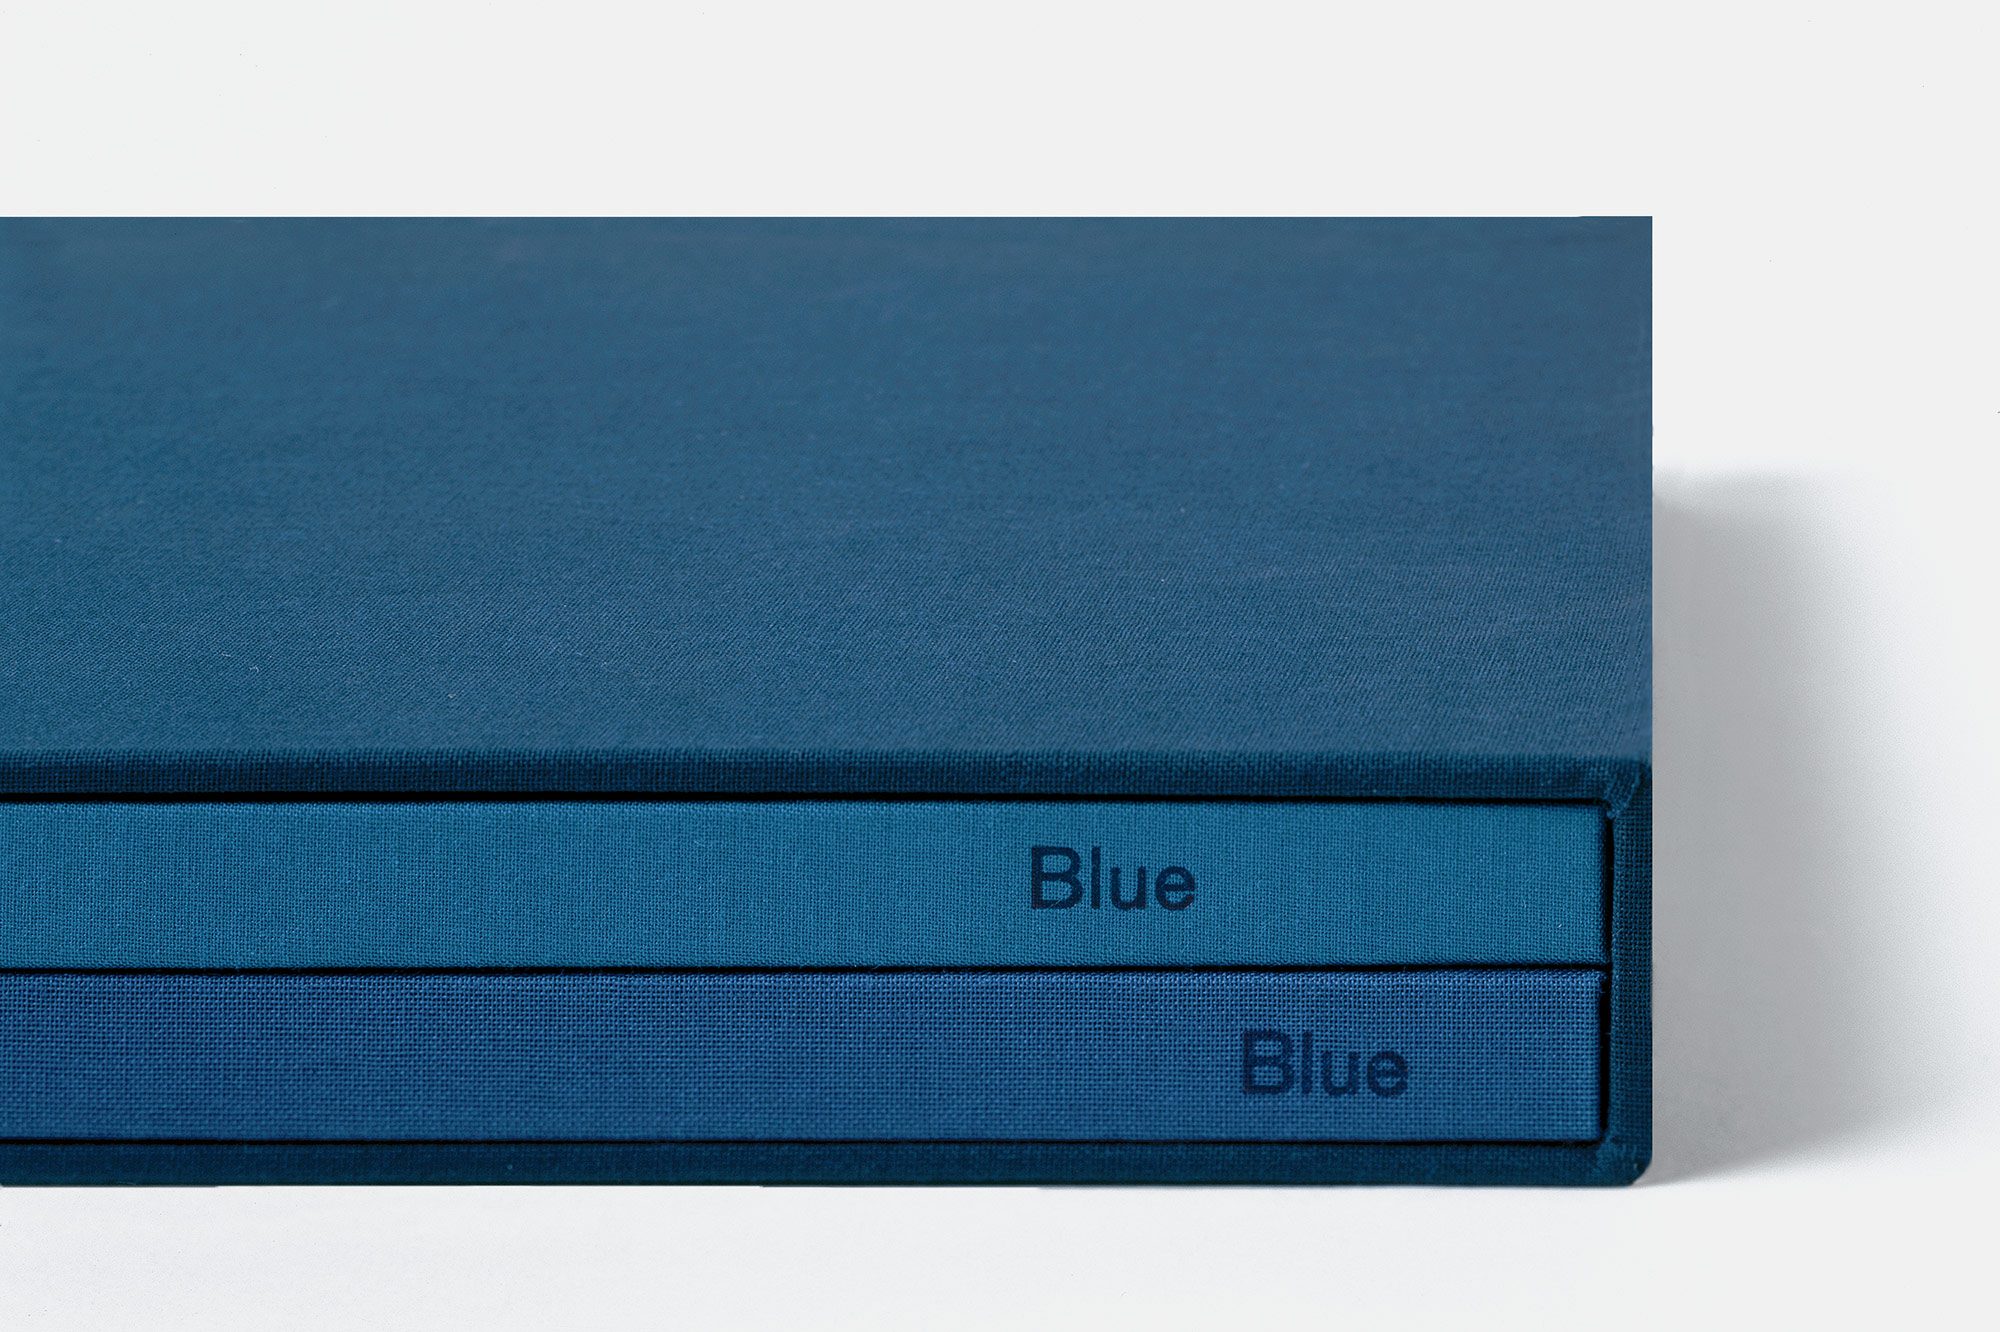 THE BLUE BOOKS